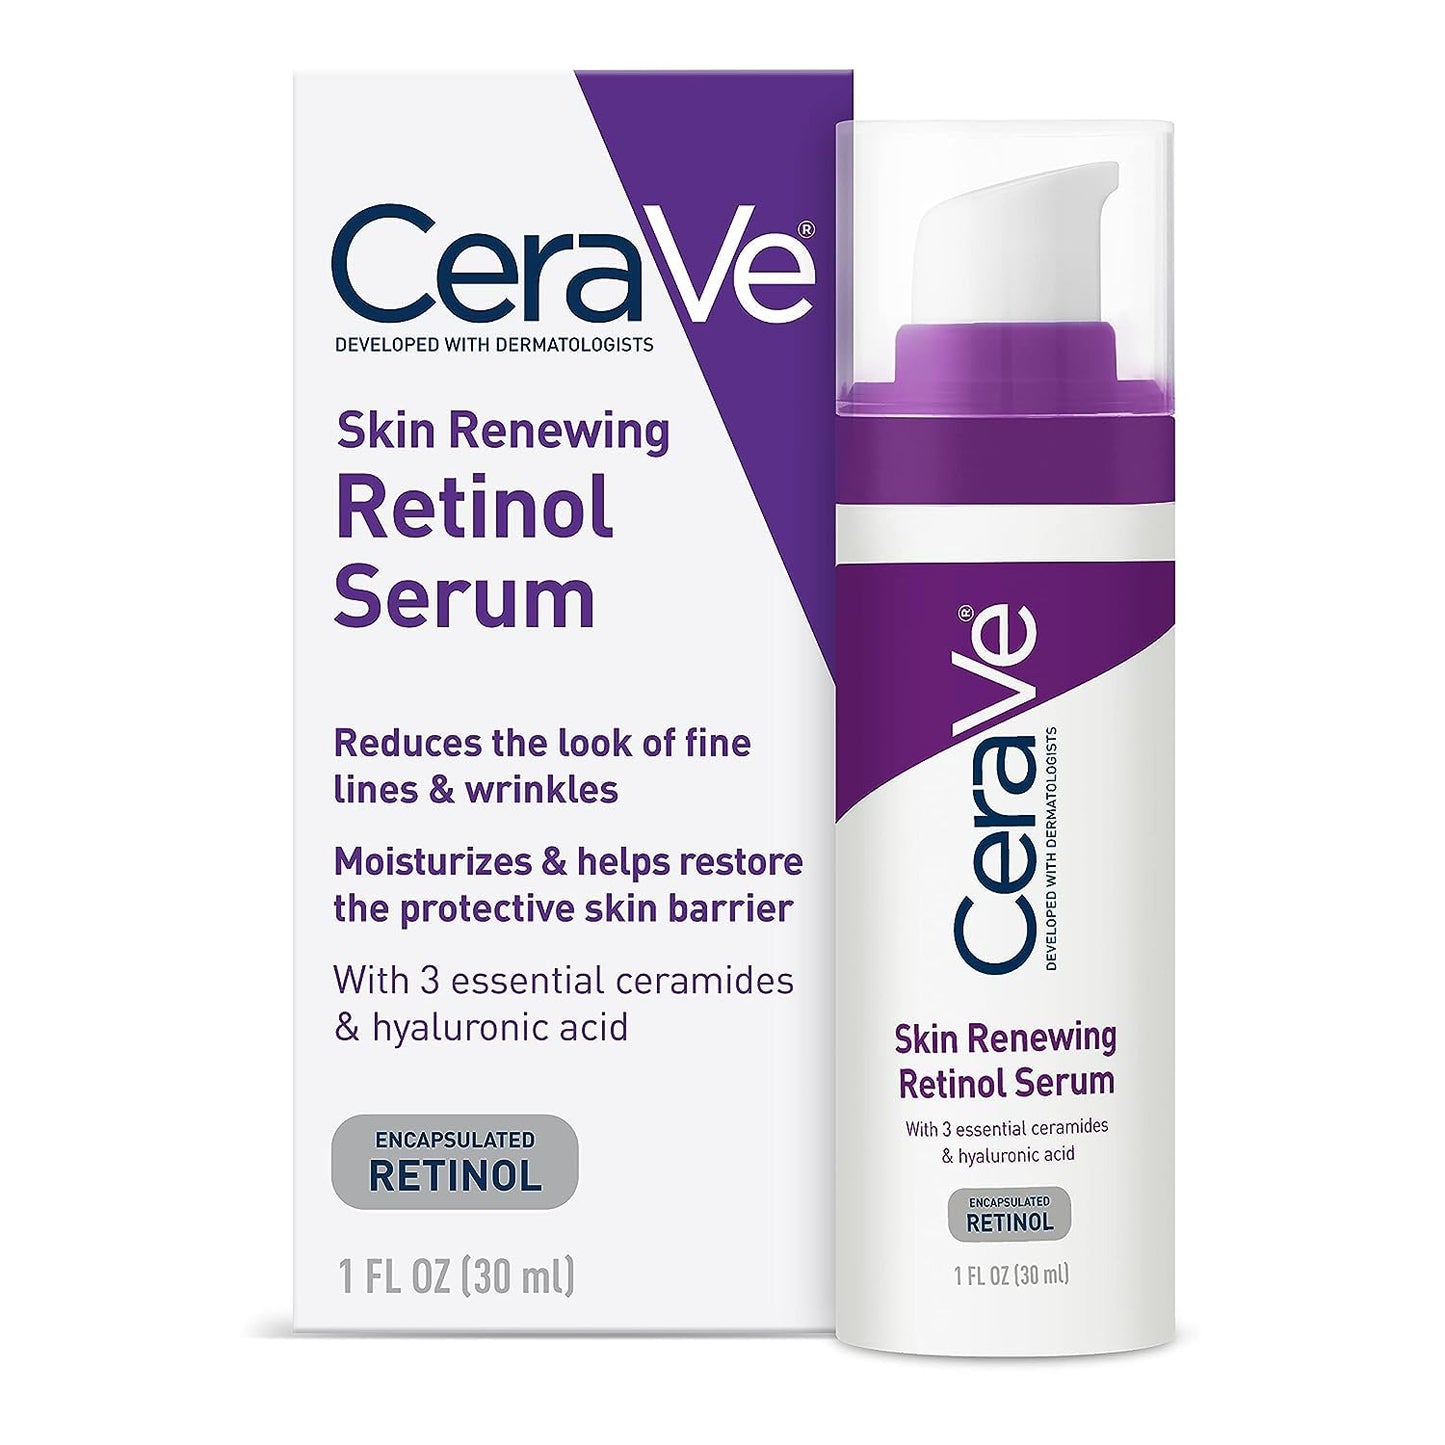 CeraVe Skin Renewing Retinol/Normal to Dry skin/Hyaluronic Acid